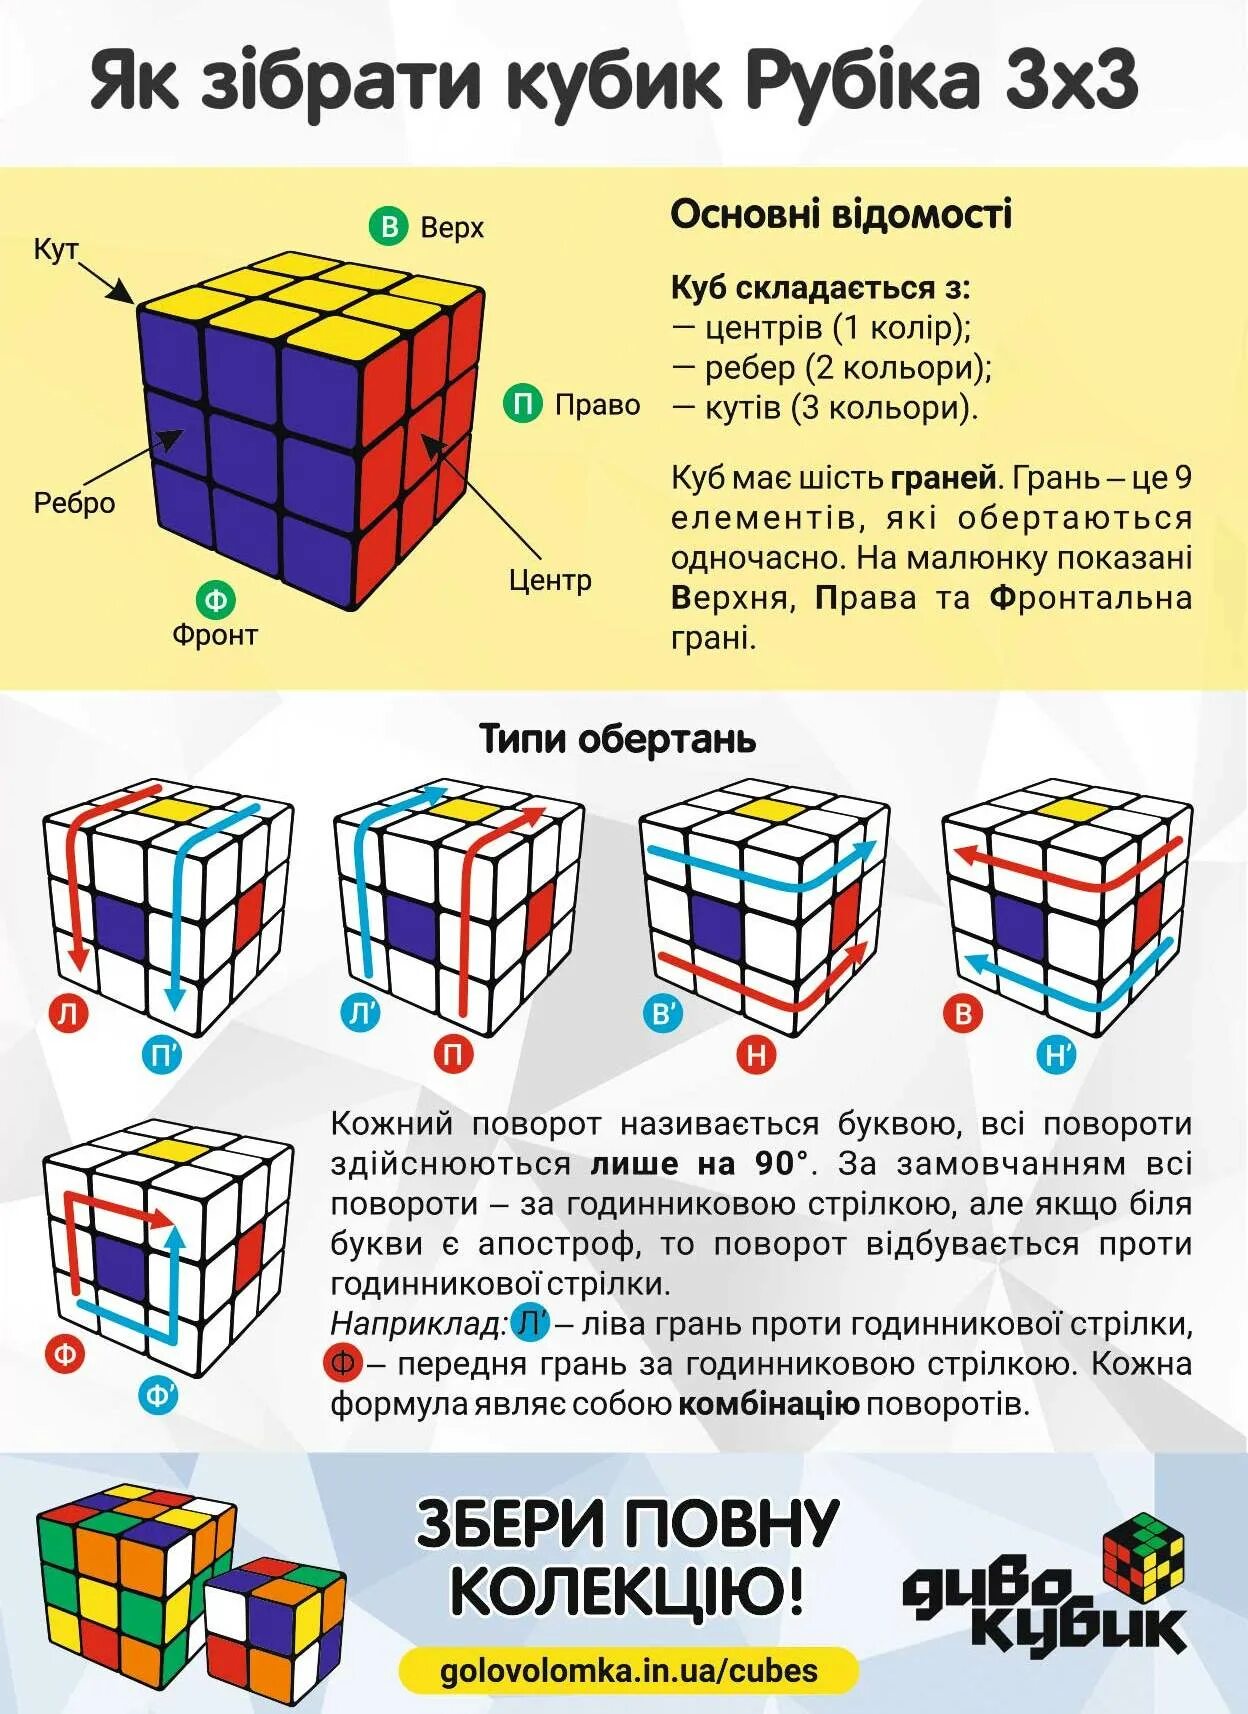 Схема сборки кубика Рубика 3х3 для начинающих. Комбинации кубика Рубика 3х3. Комбинации сборки кубика Рубика 3х3. Формулы кубика Рубика 3х3 для начинающих.